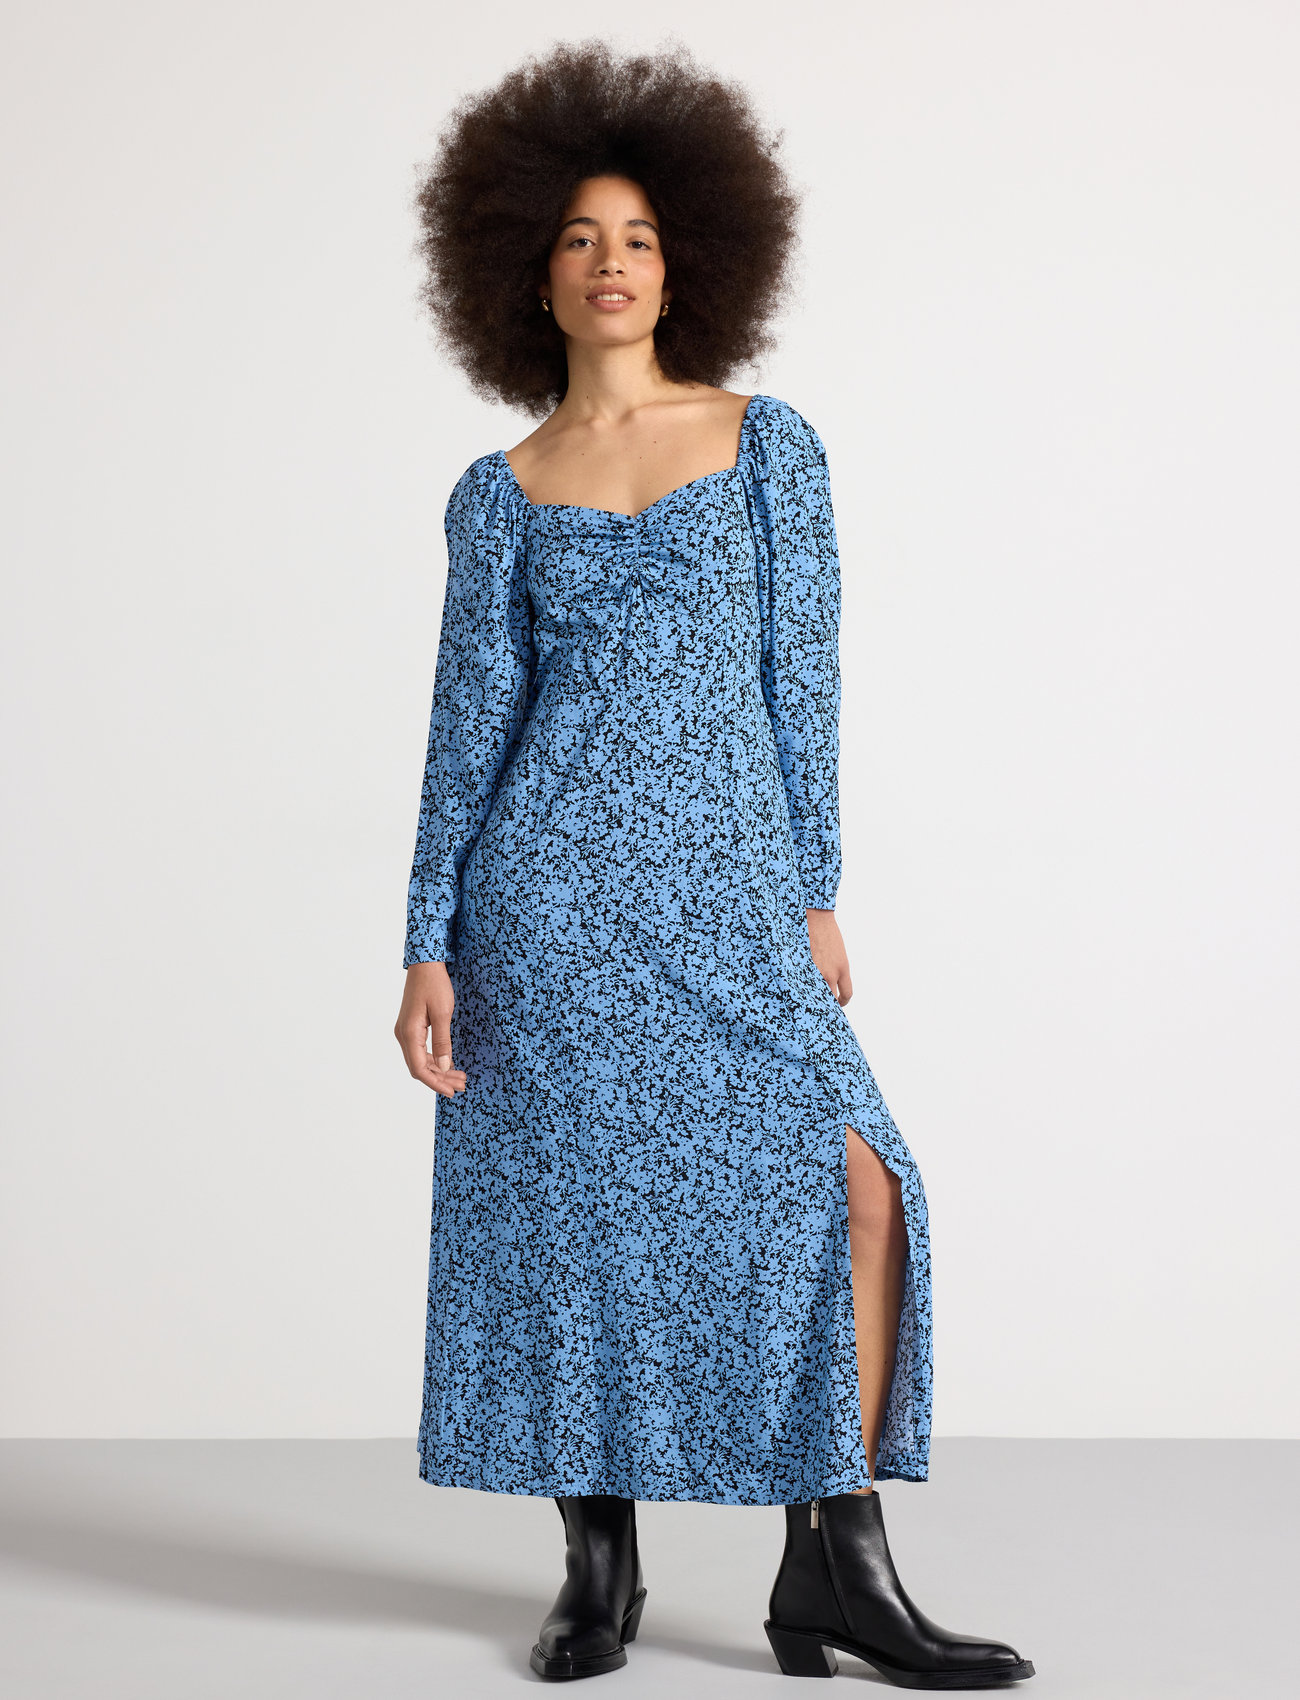 Lindex - Dress Rosie - maxi dresses - light dusty blue - 0